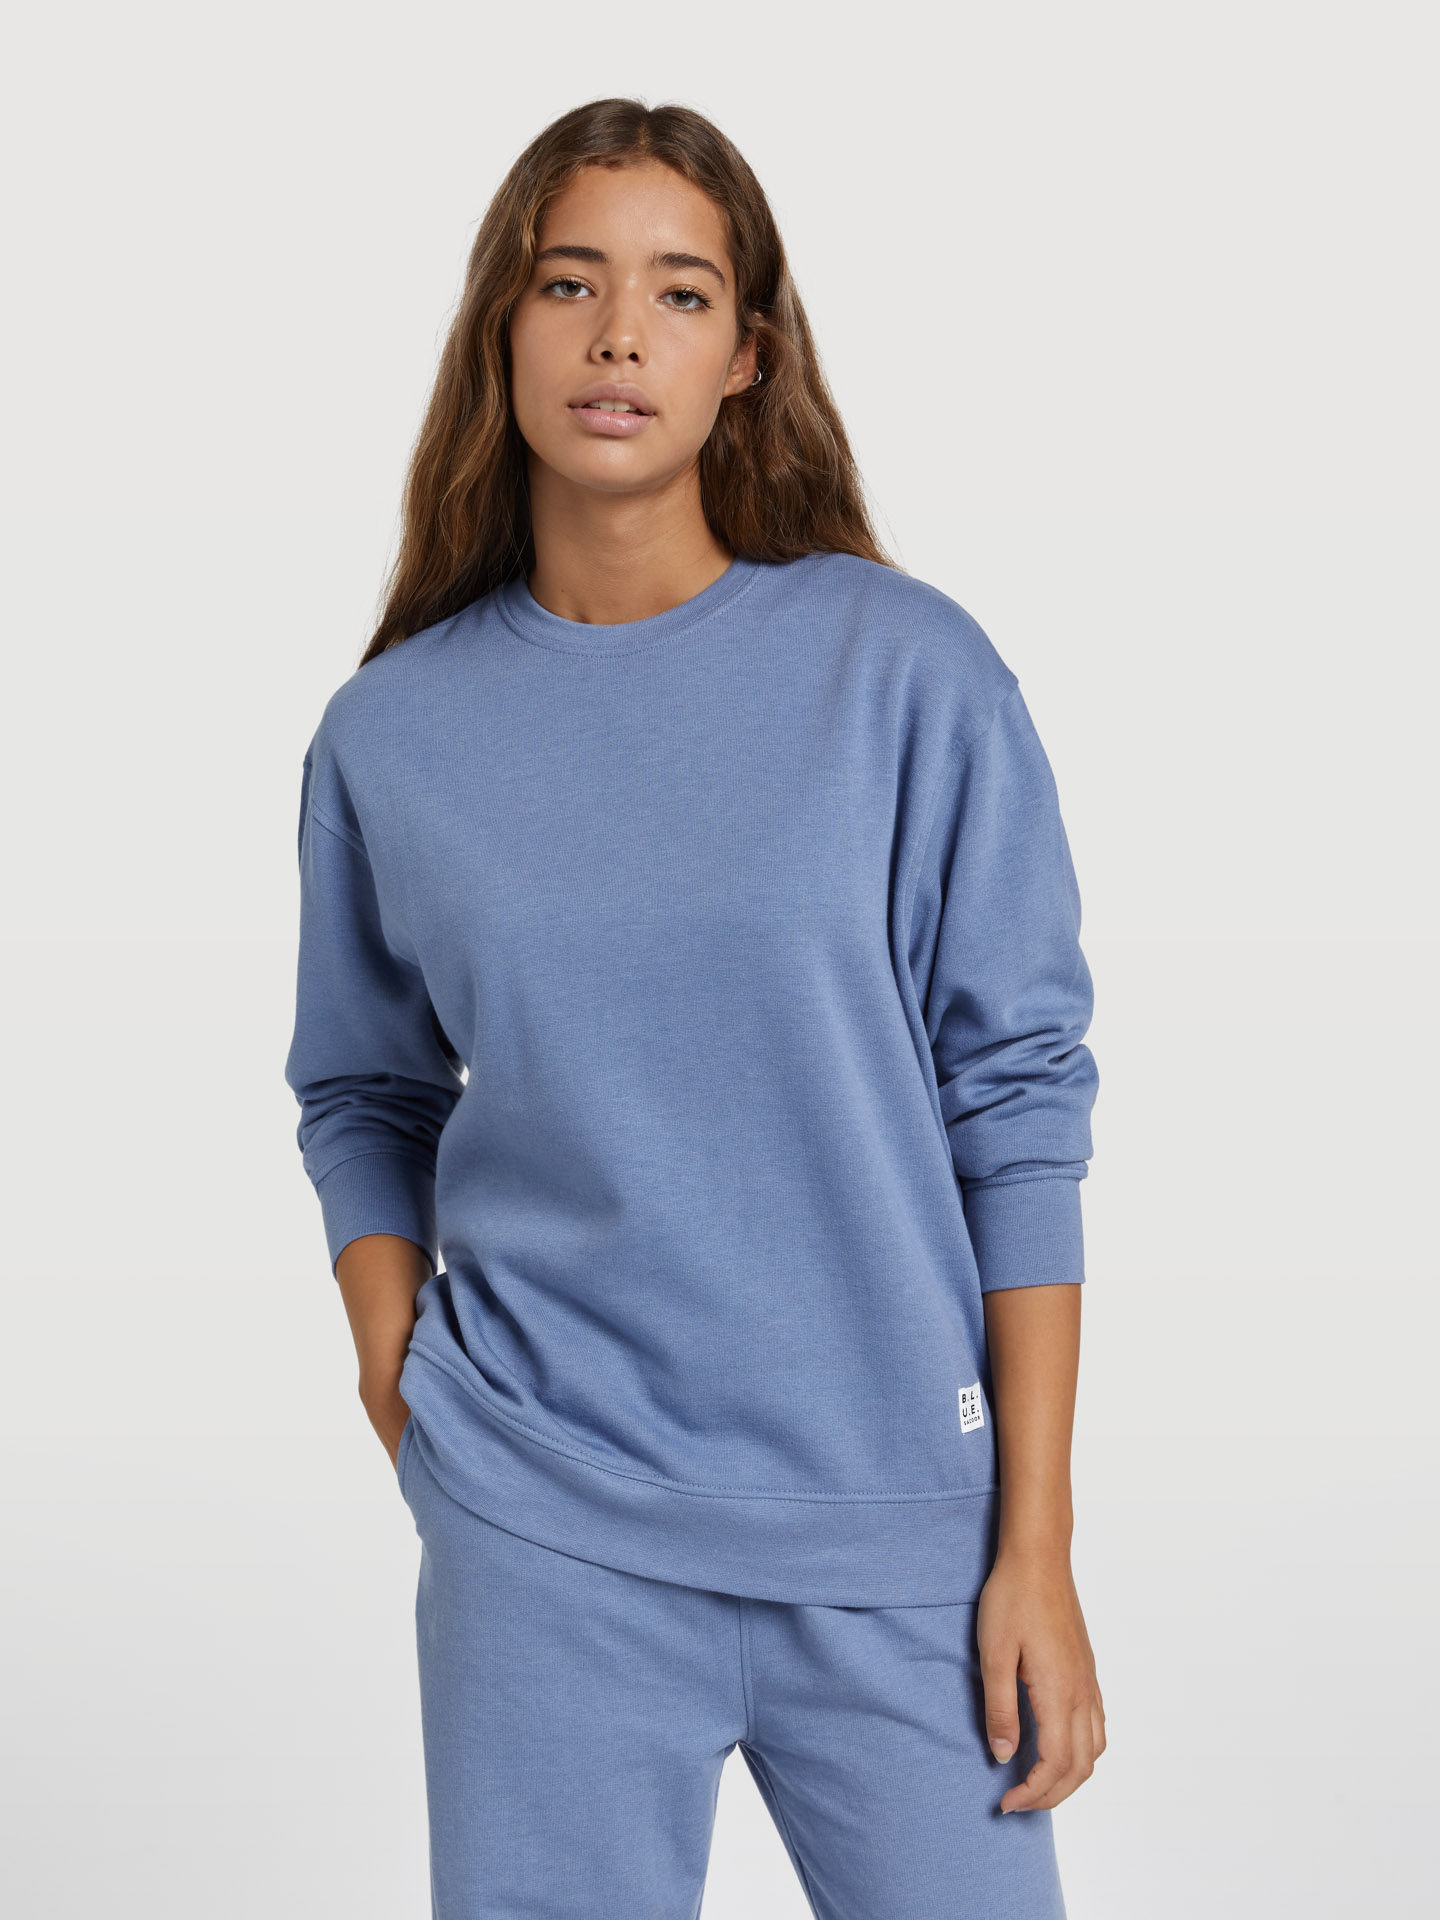 Sweatshirt Azul Claro Casual Mulher